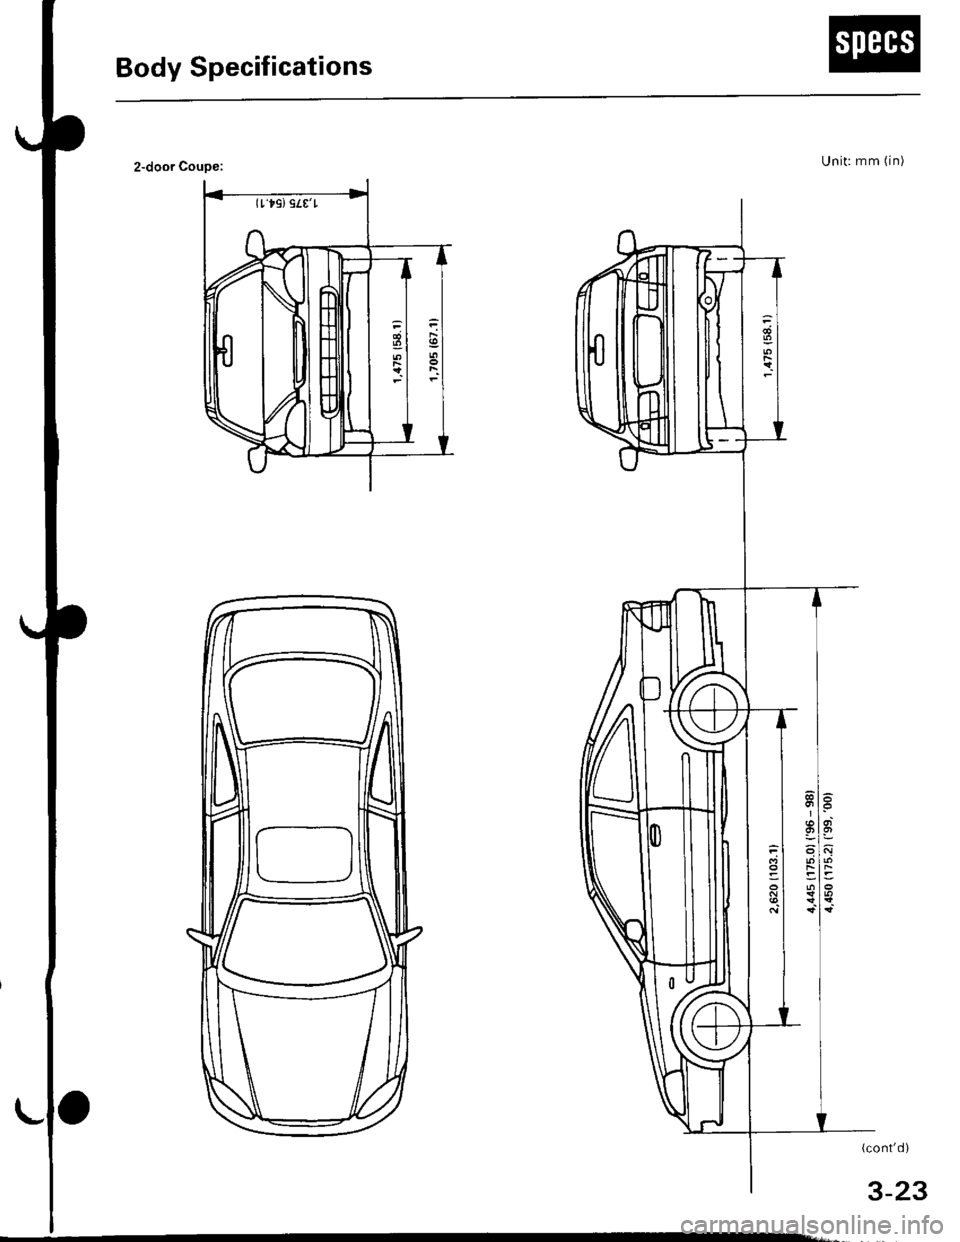 HONDA CIVIC 1998 6.G Repair Manual Body Specifications
Unit: mm (in)2-door Coupe:
lt t9) gttt 